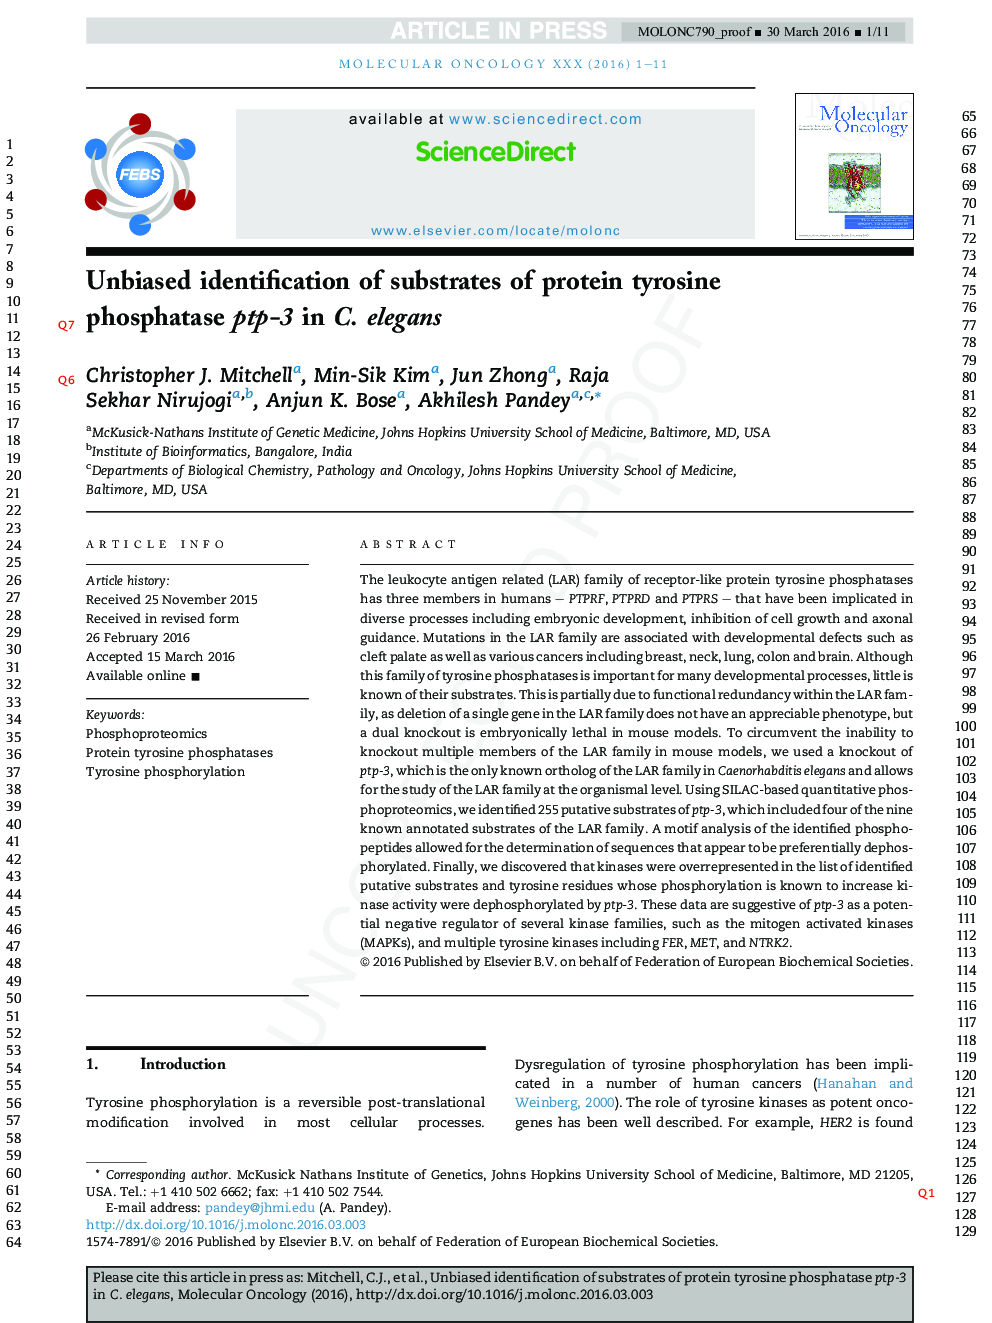 Unbiased identification of substrates of protein tyrosine phosphatase ptp-3 in C. elegans